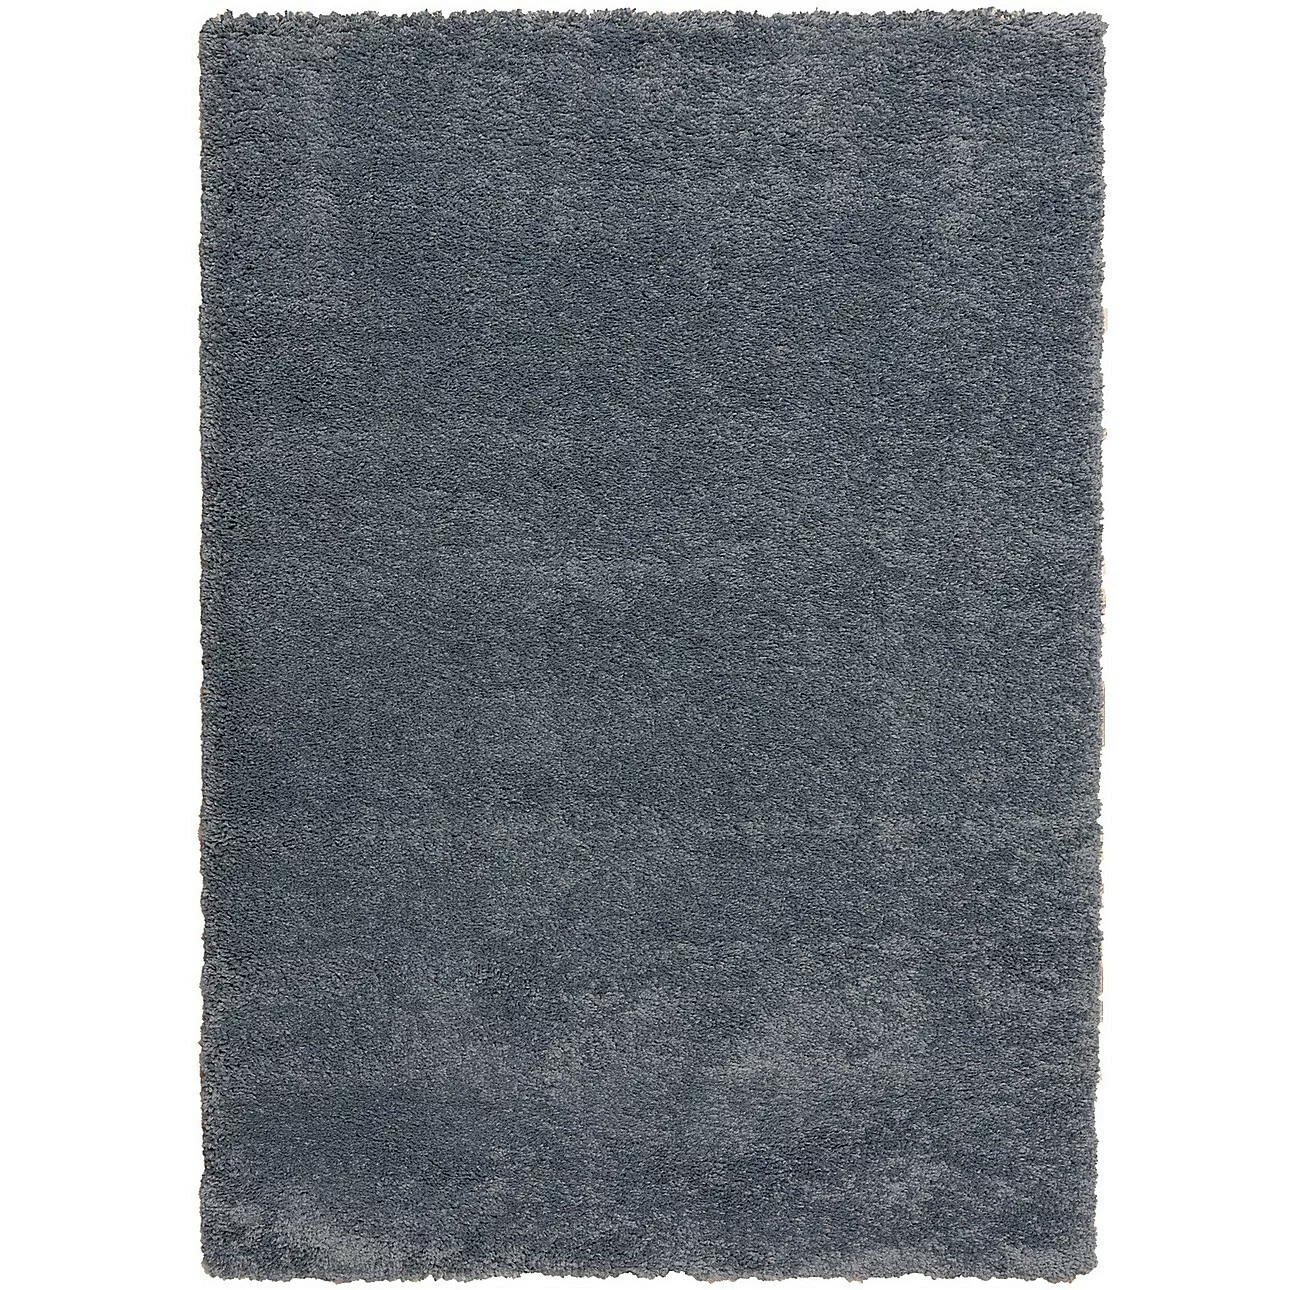 Teppich Royal smoky blue 120x170cm, 120 x 170 cm günstig online kaufen